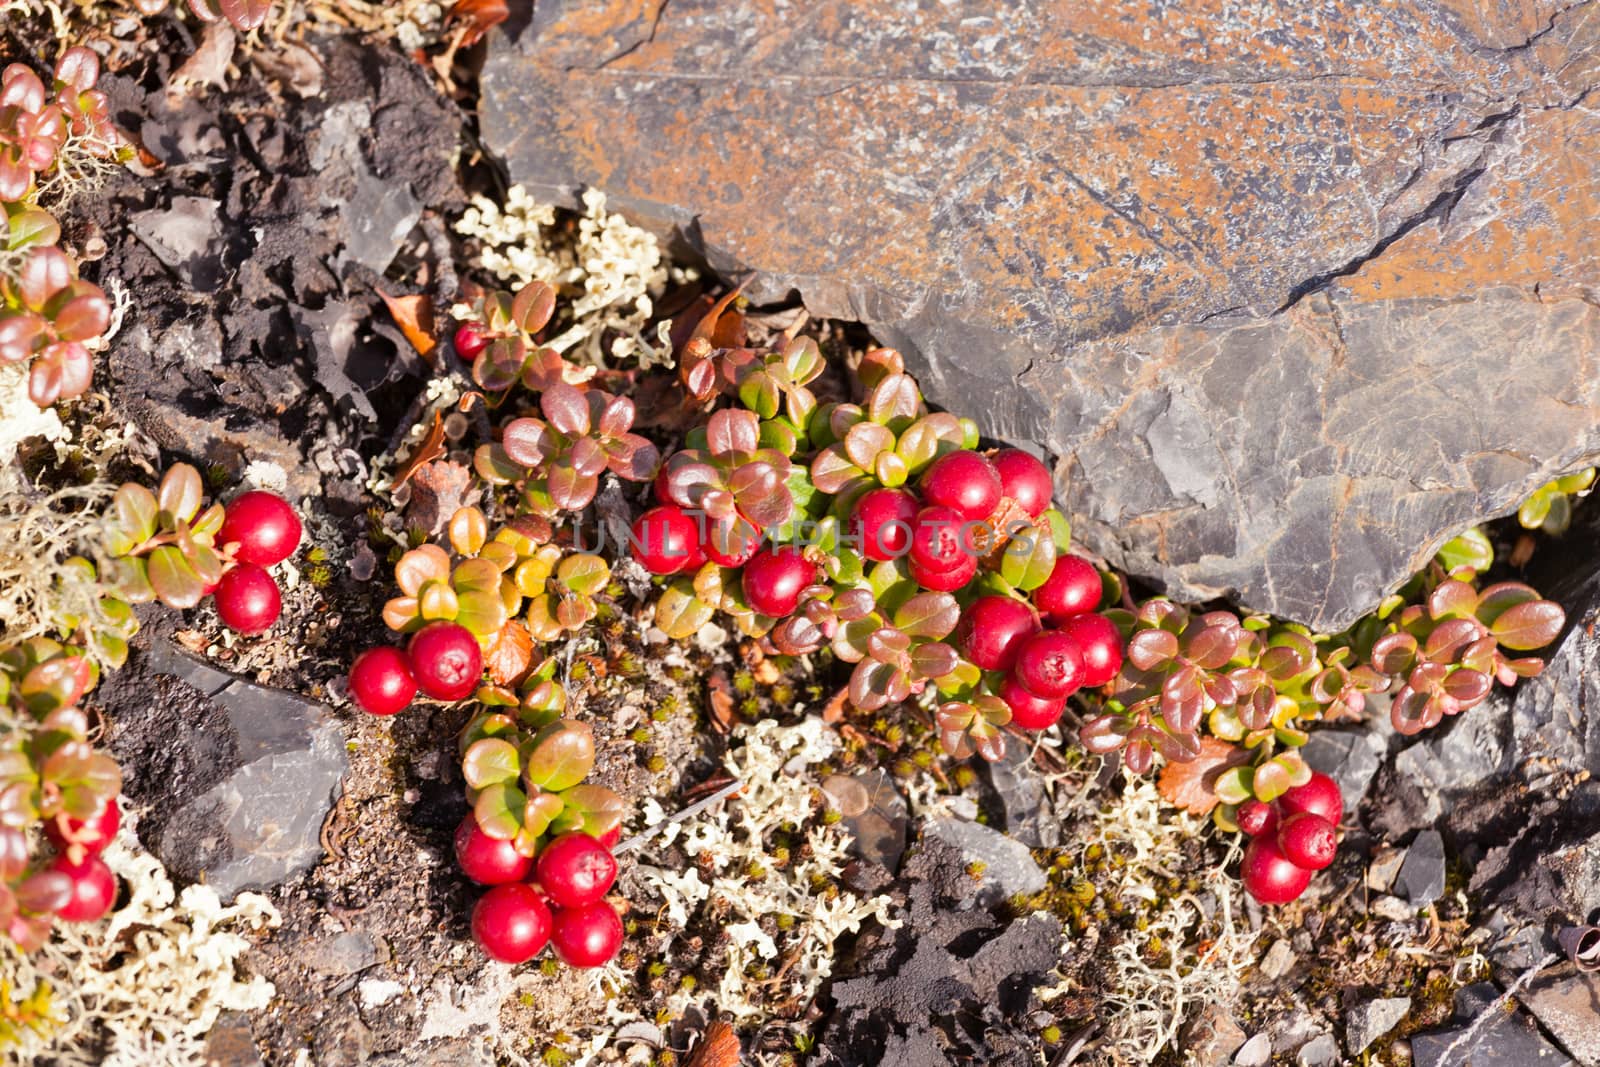 Ripe Cranberries Vaccinium vitis-idaea rock ground by PiLens